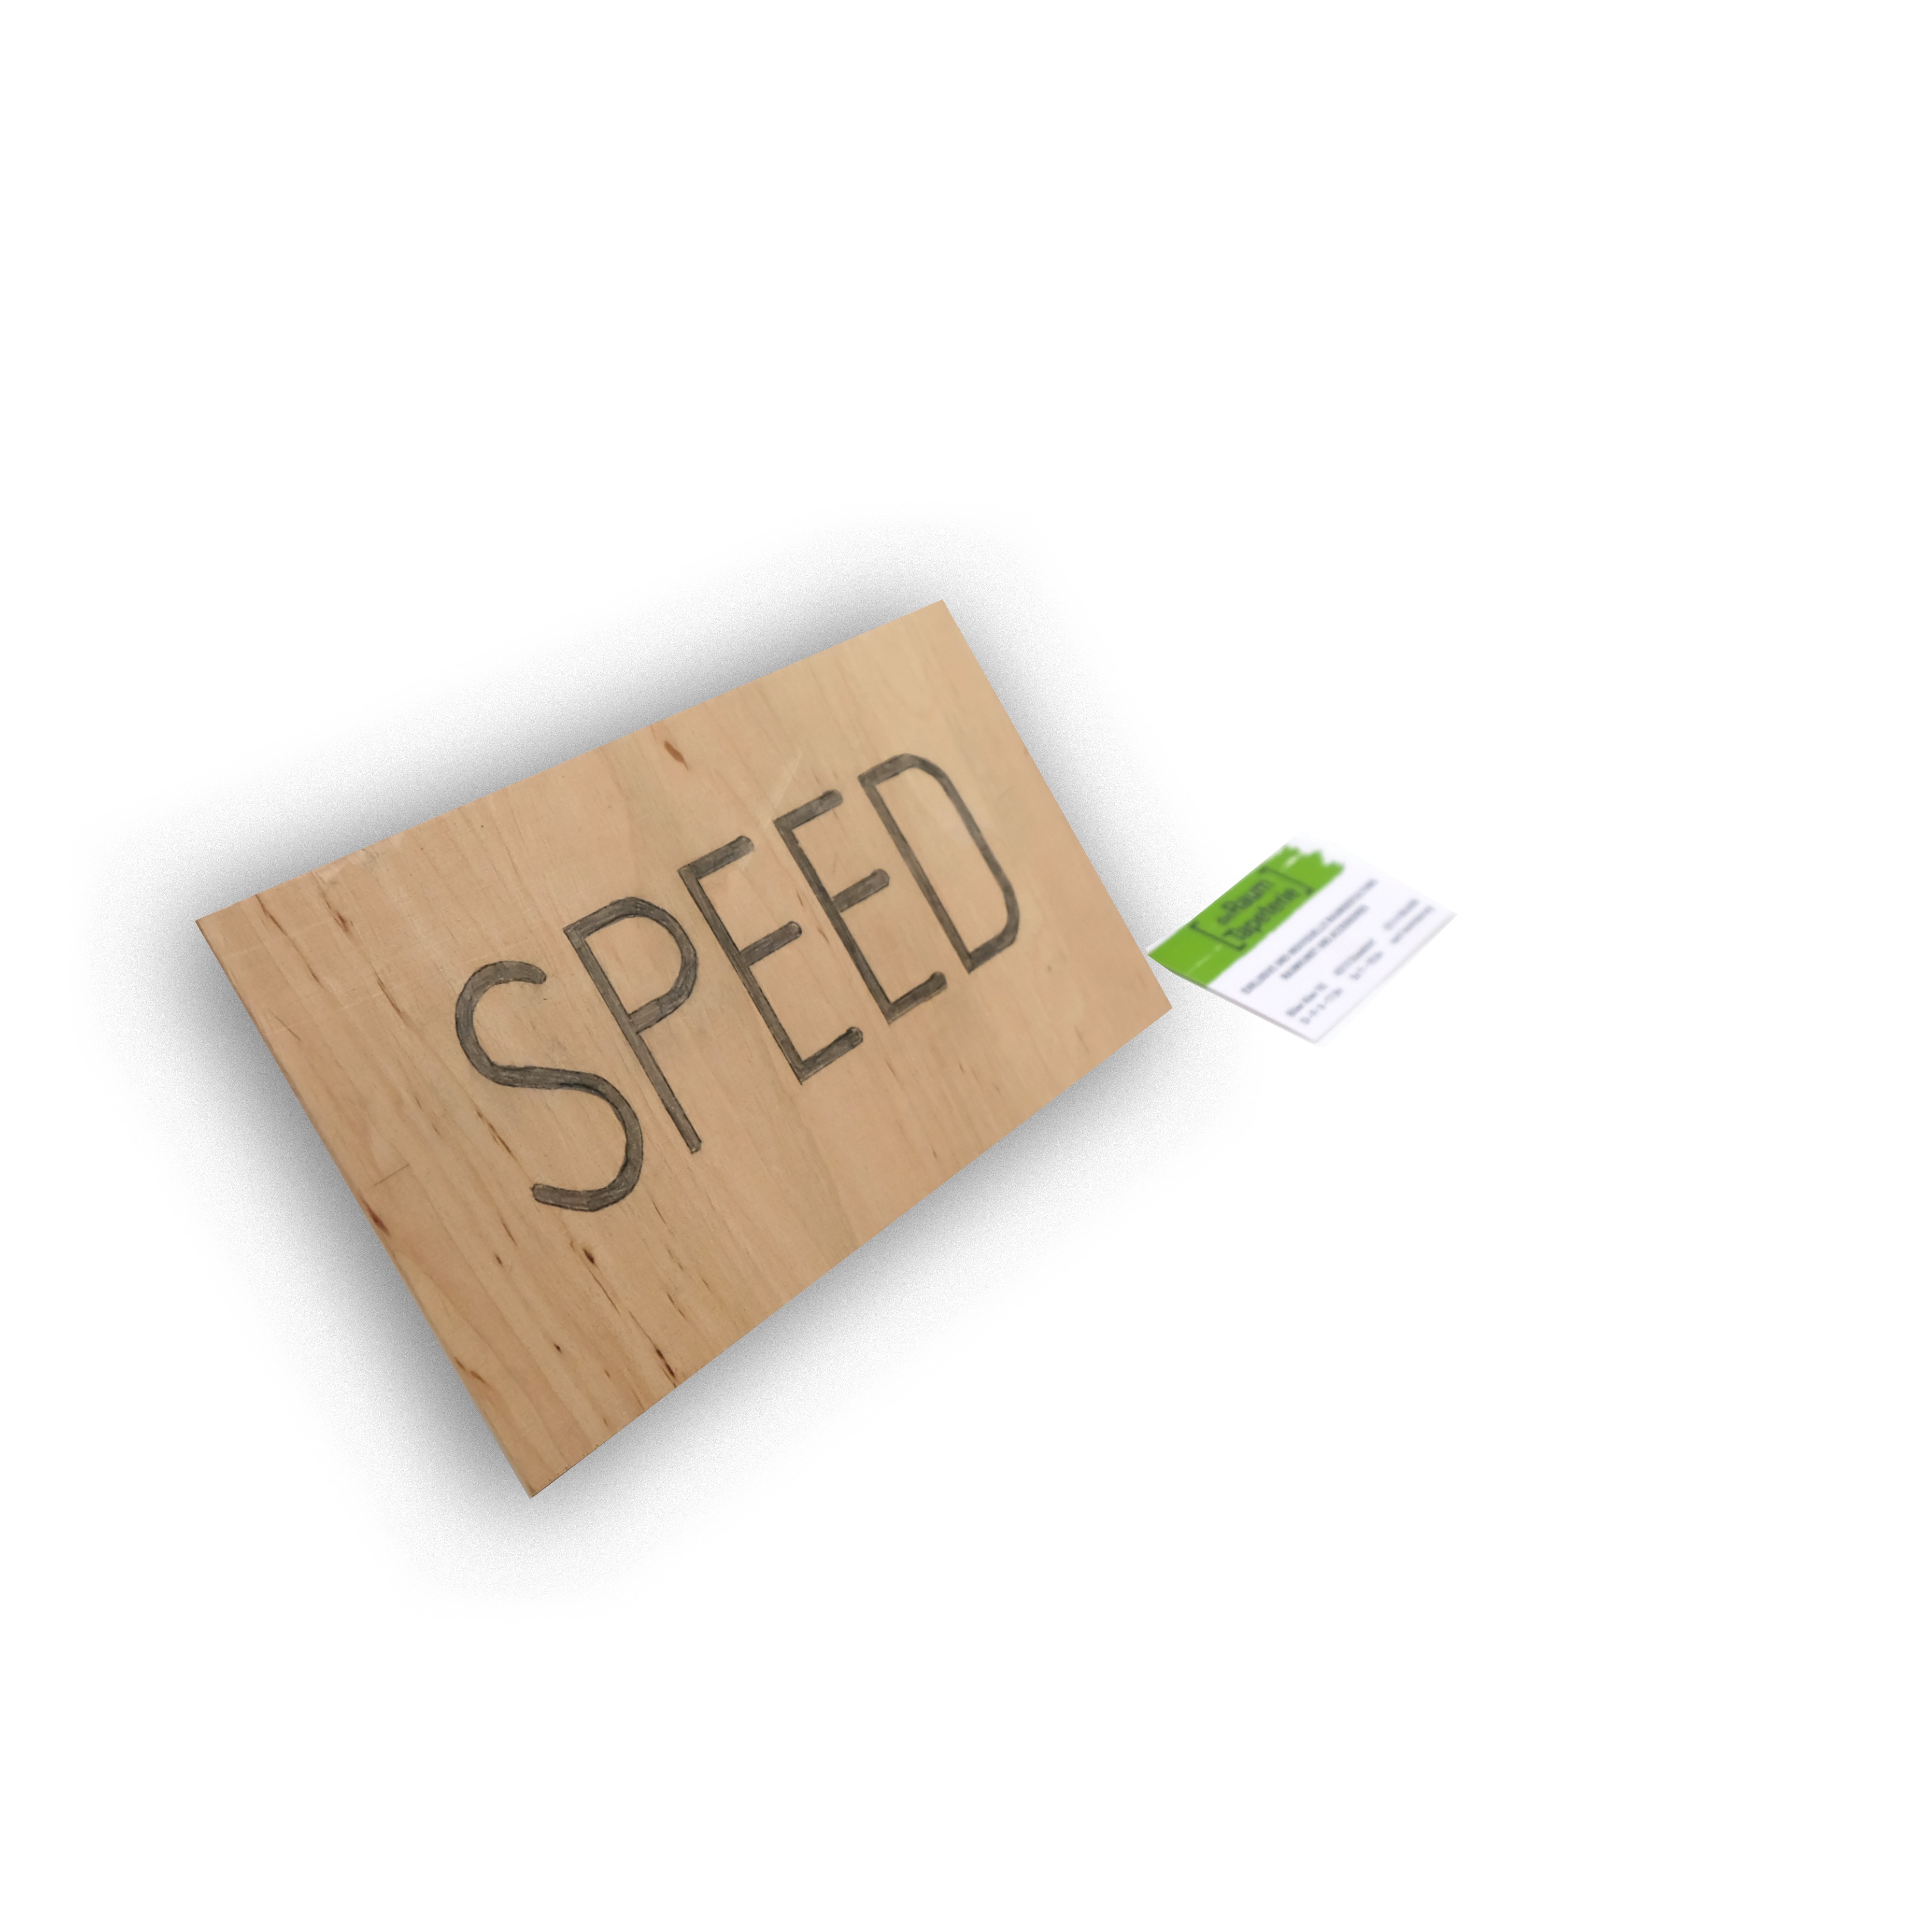 Speed Typografie, yagemedia Grafik